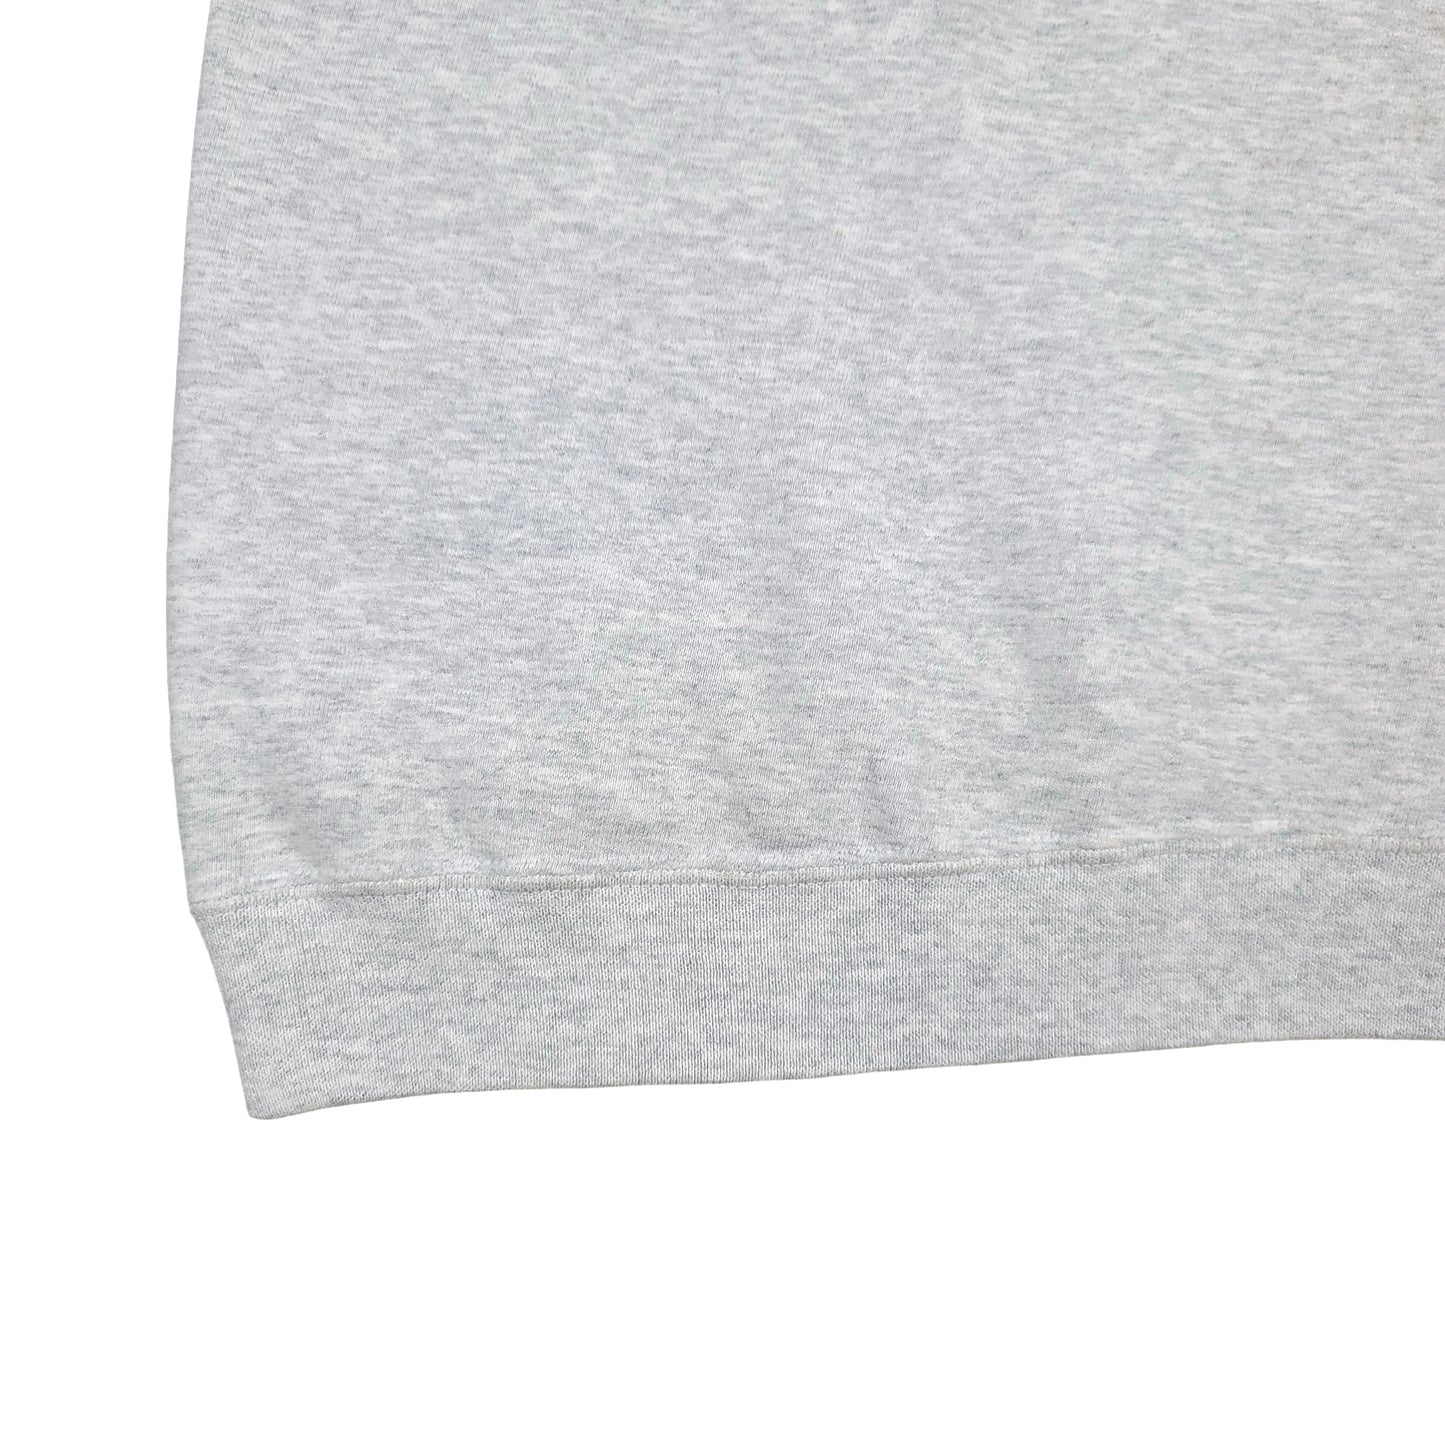 Vintage USA Olympic Rings Gray Sweatshirt